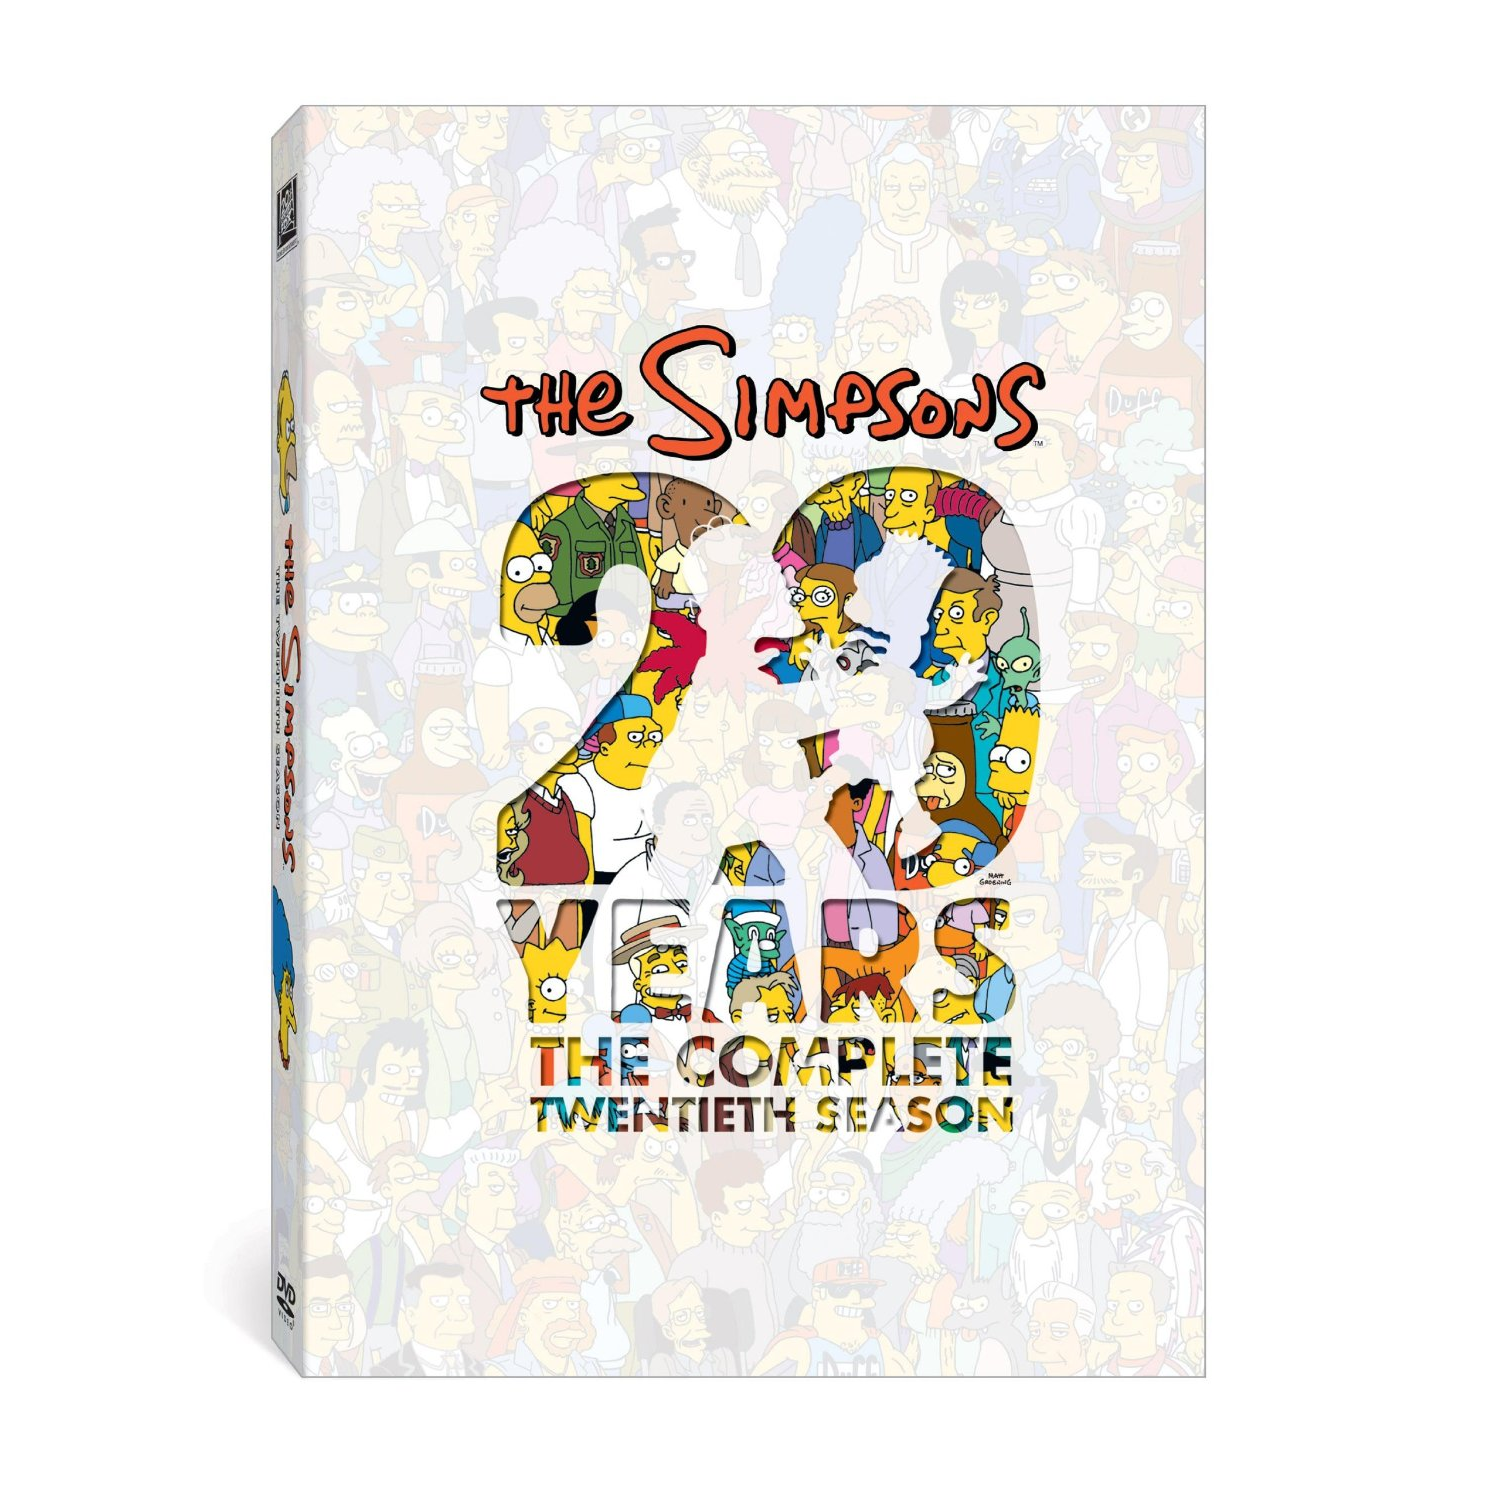 Amazon: The Simpsons Season 20 Only $7.99 on DVD!